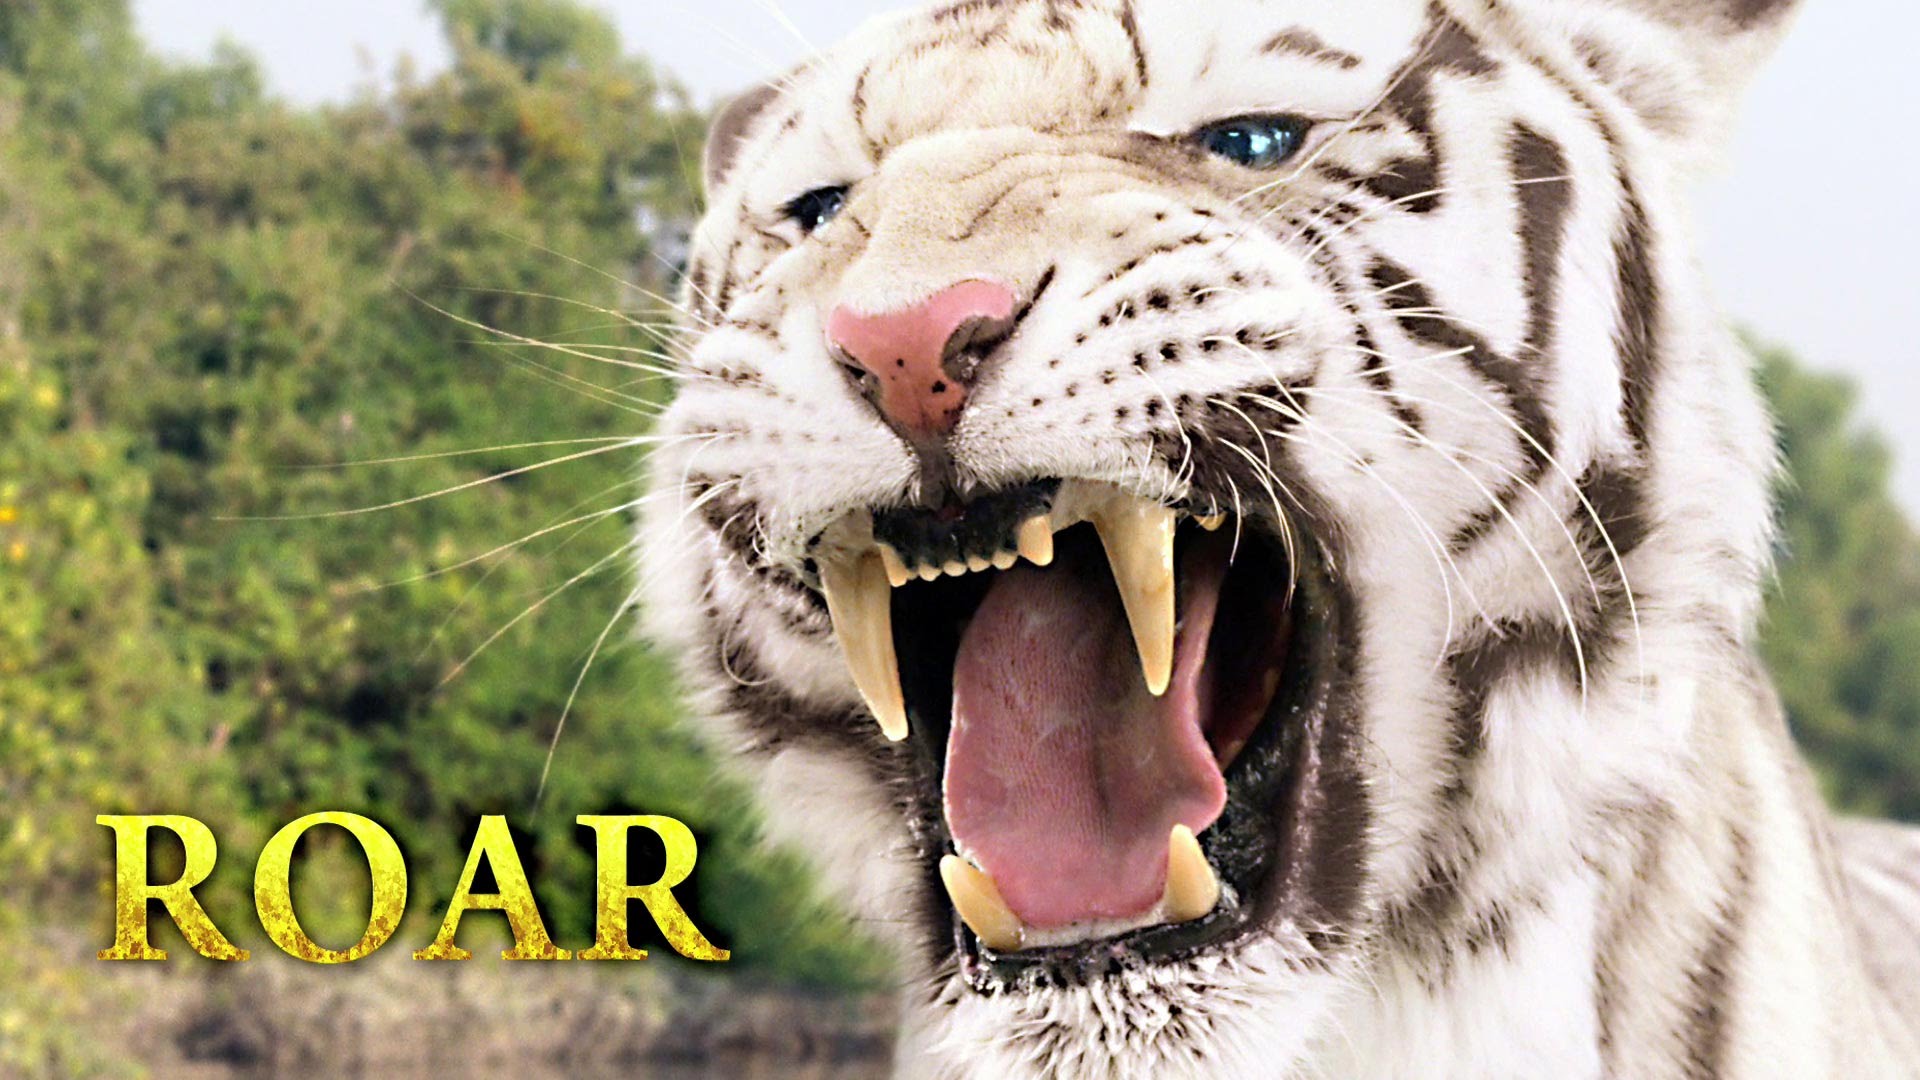 Roar: Tigers Of The Sundarbans Backgrounds, Compatible - PC, Mobile, Gadgets| 1920x1080 px